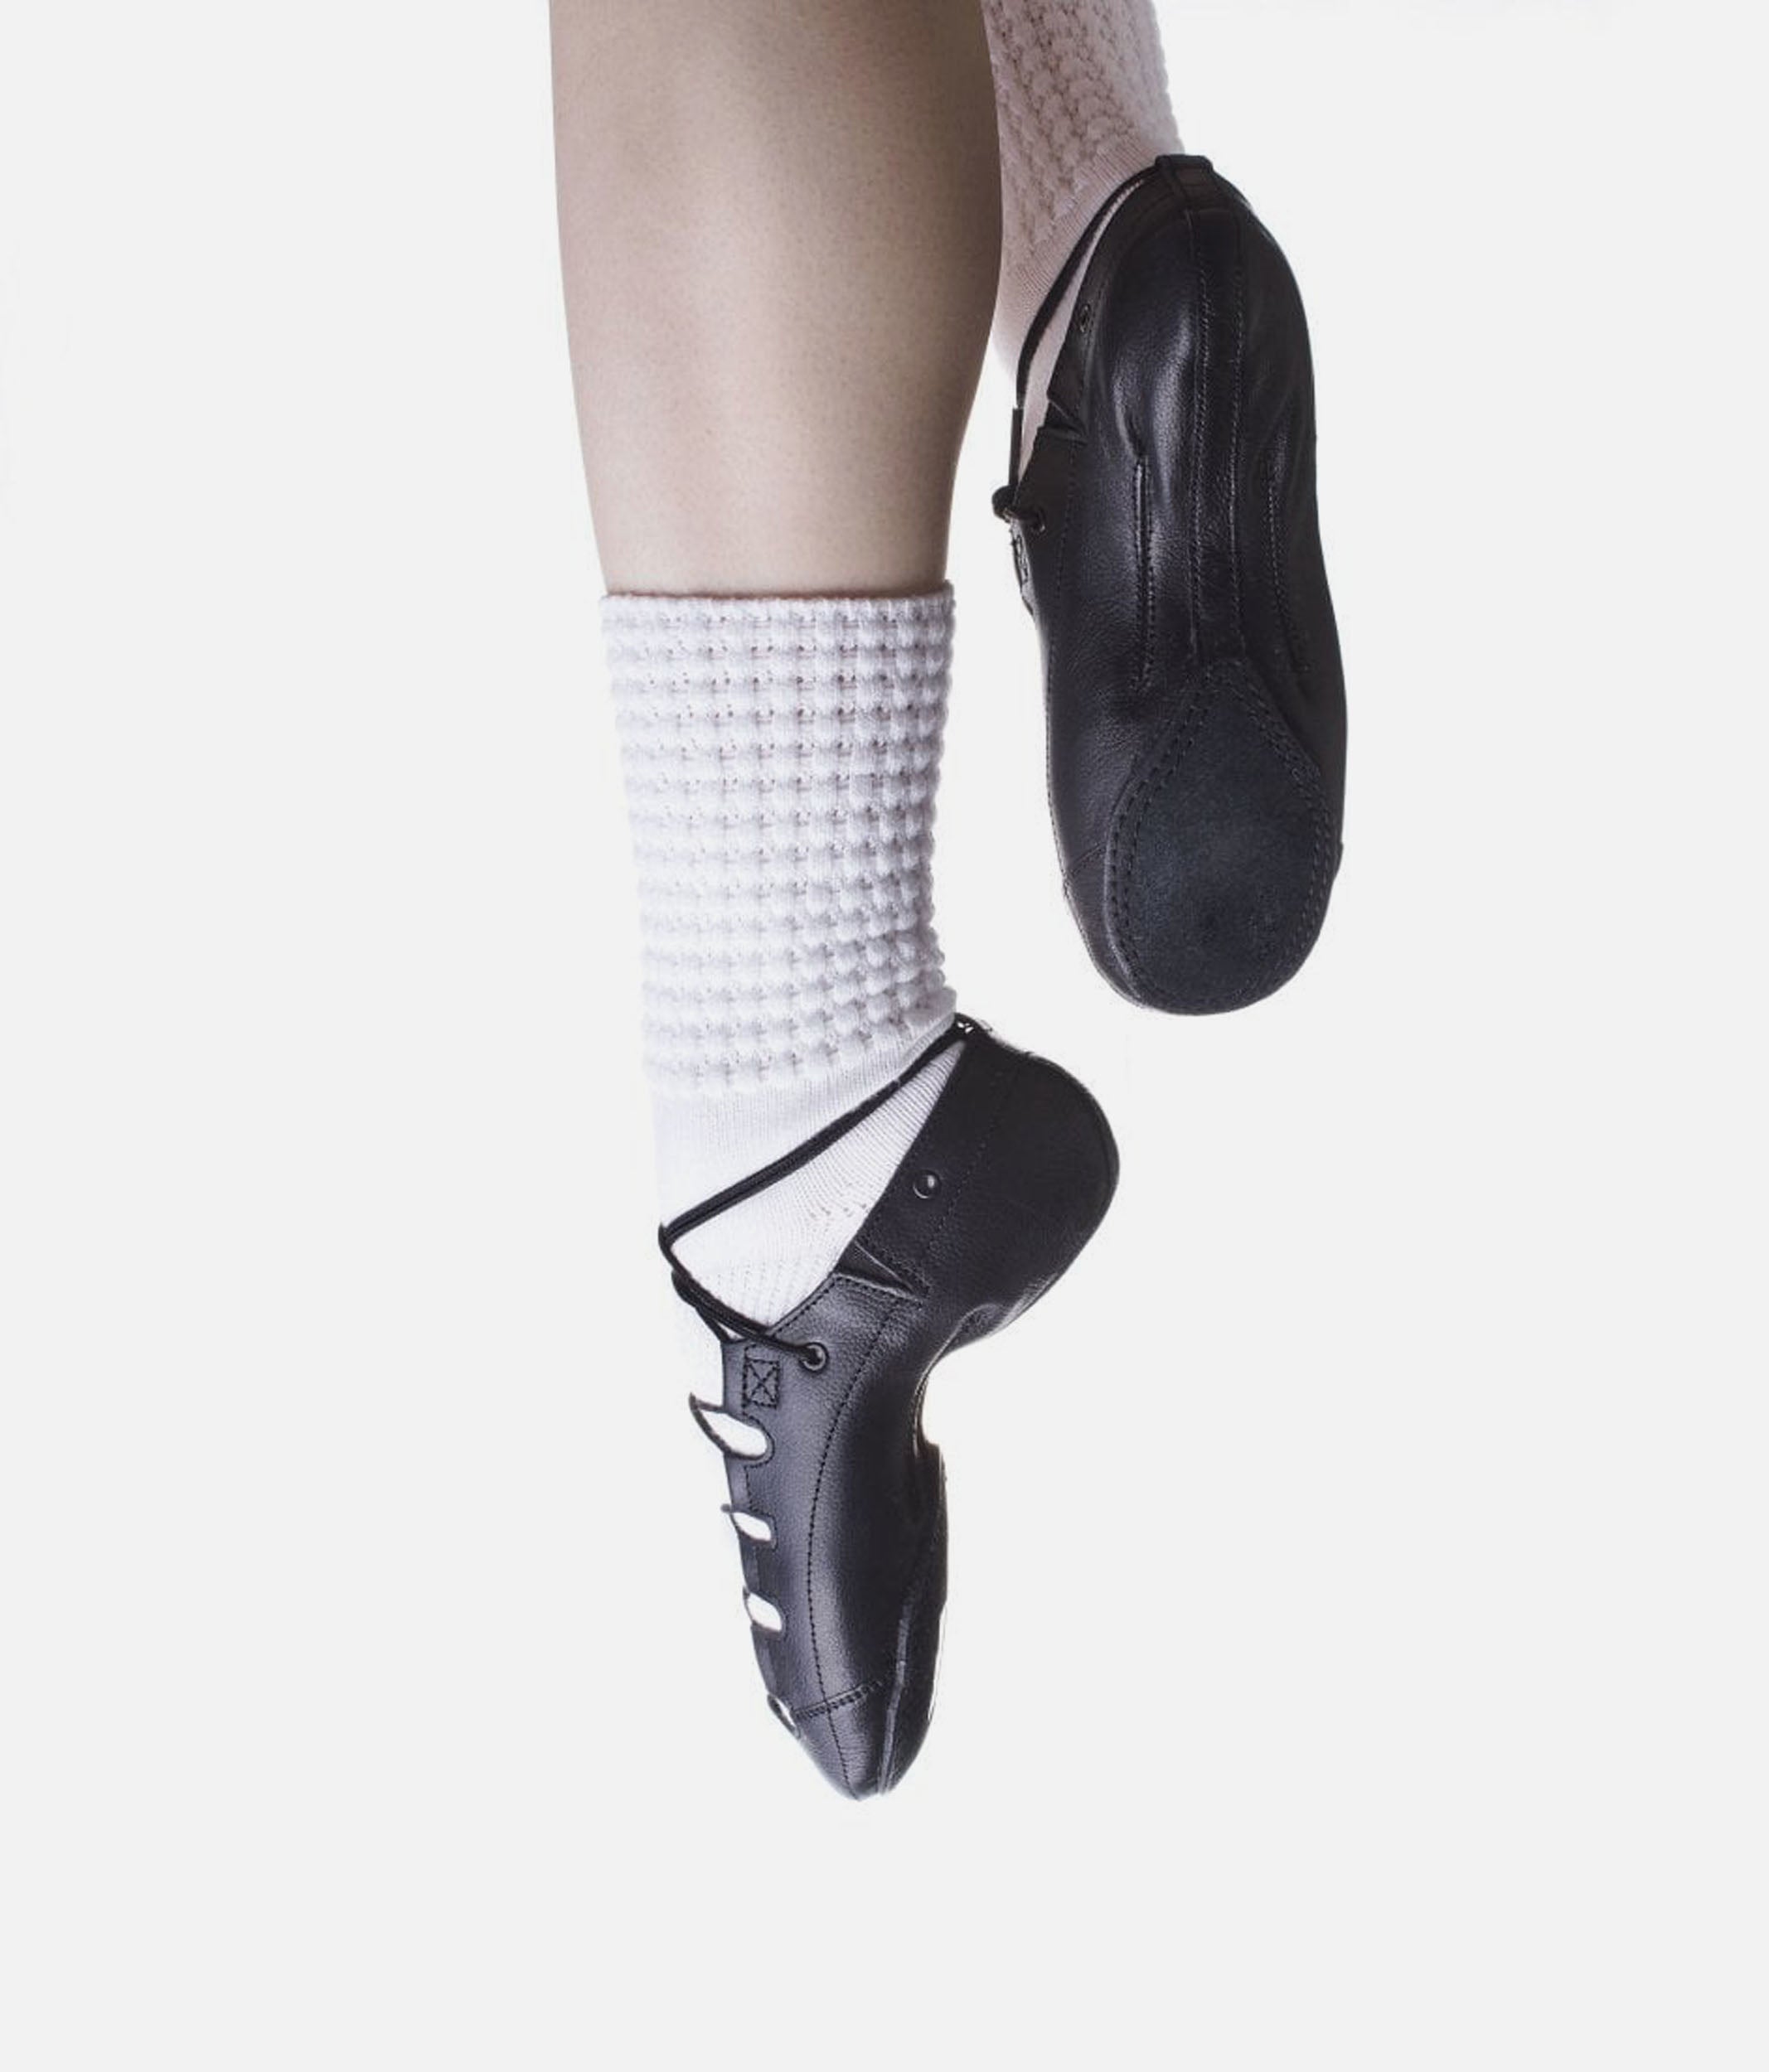 Feis Mates Irish Dance Socks — Championship Length, irish dance socks 